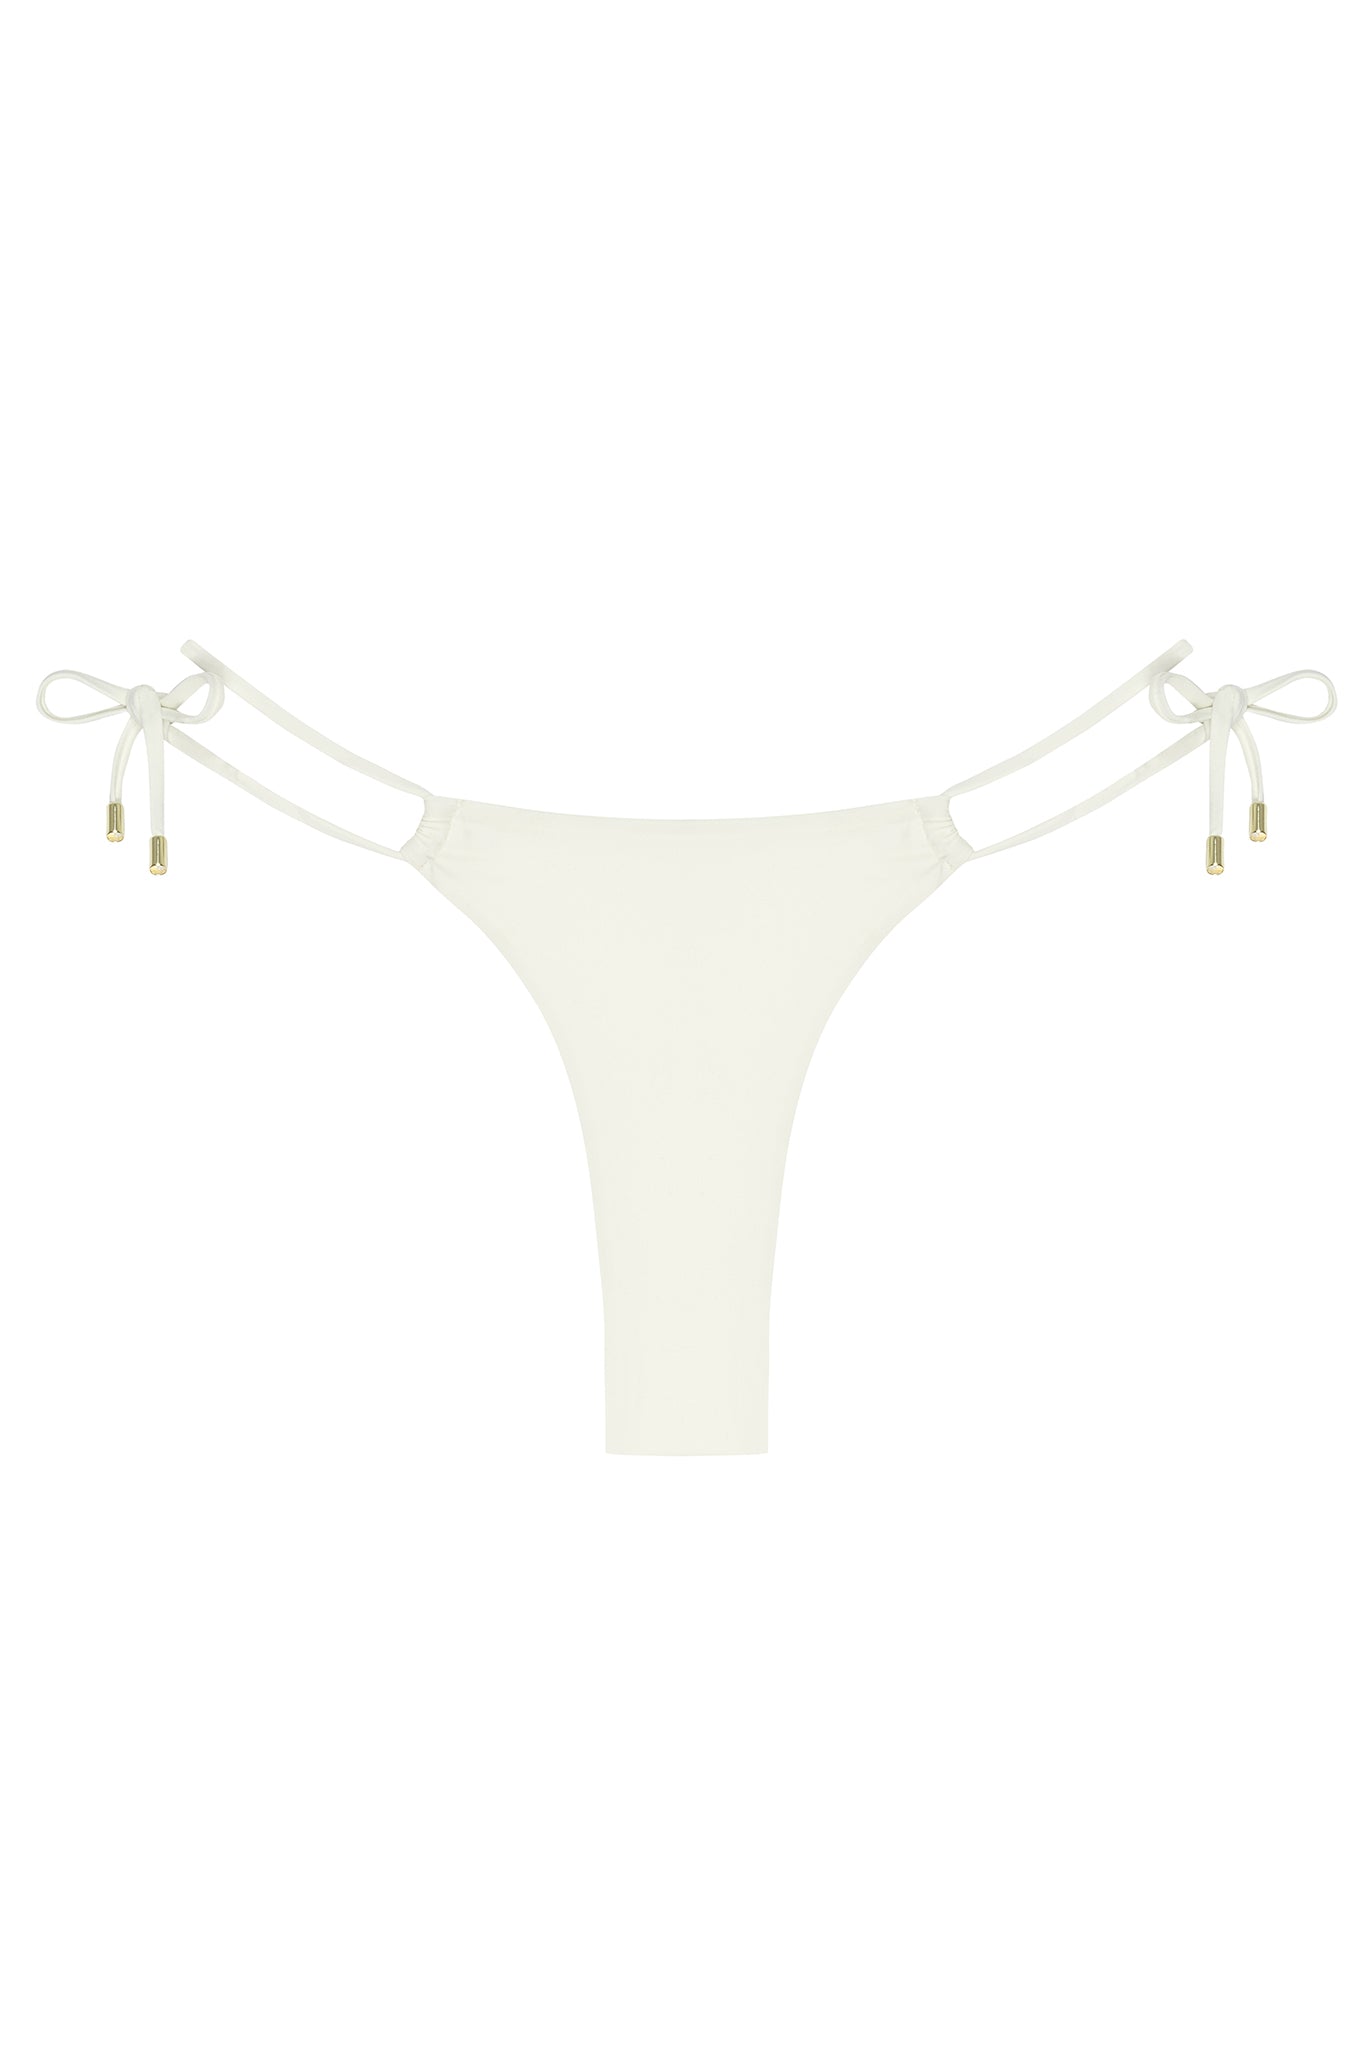 Cala Conta Bottom - Ivory – Monday Swimwear